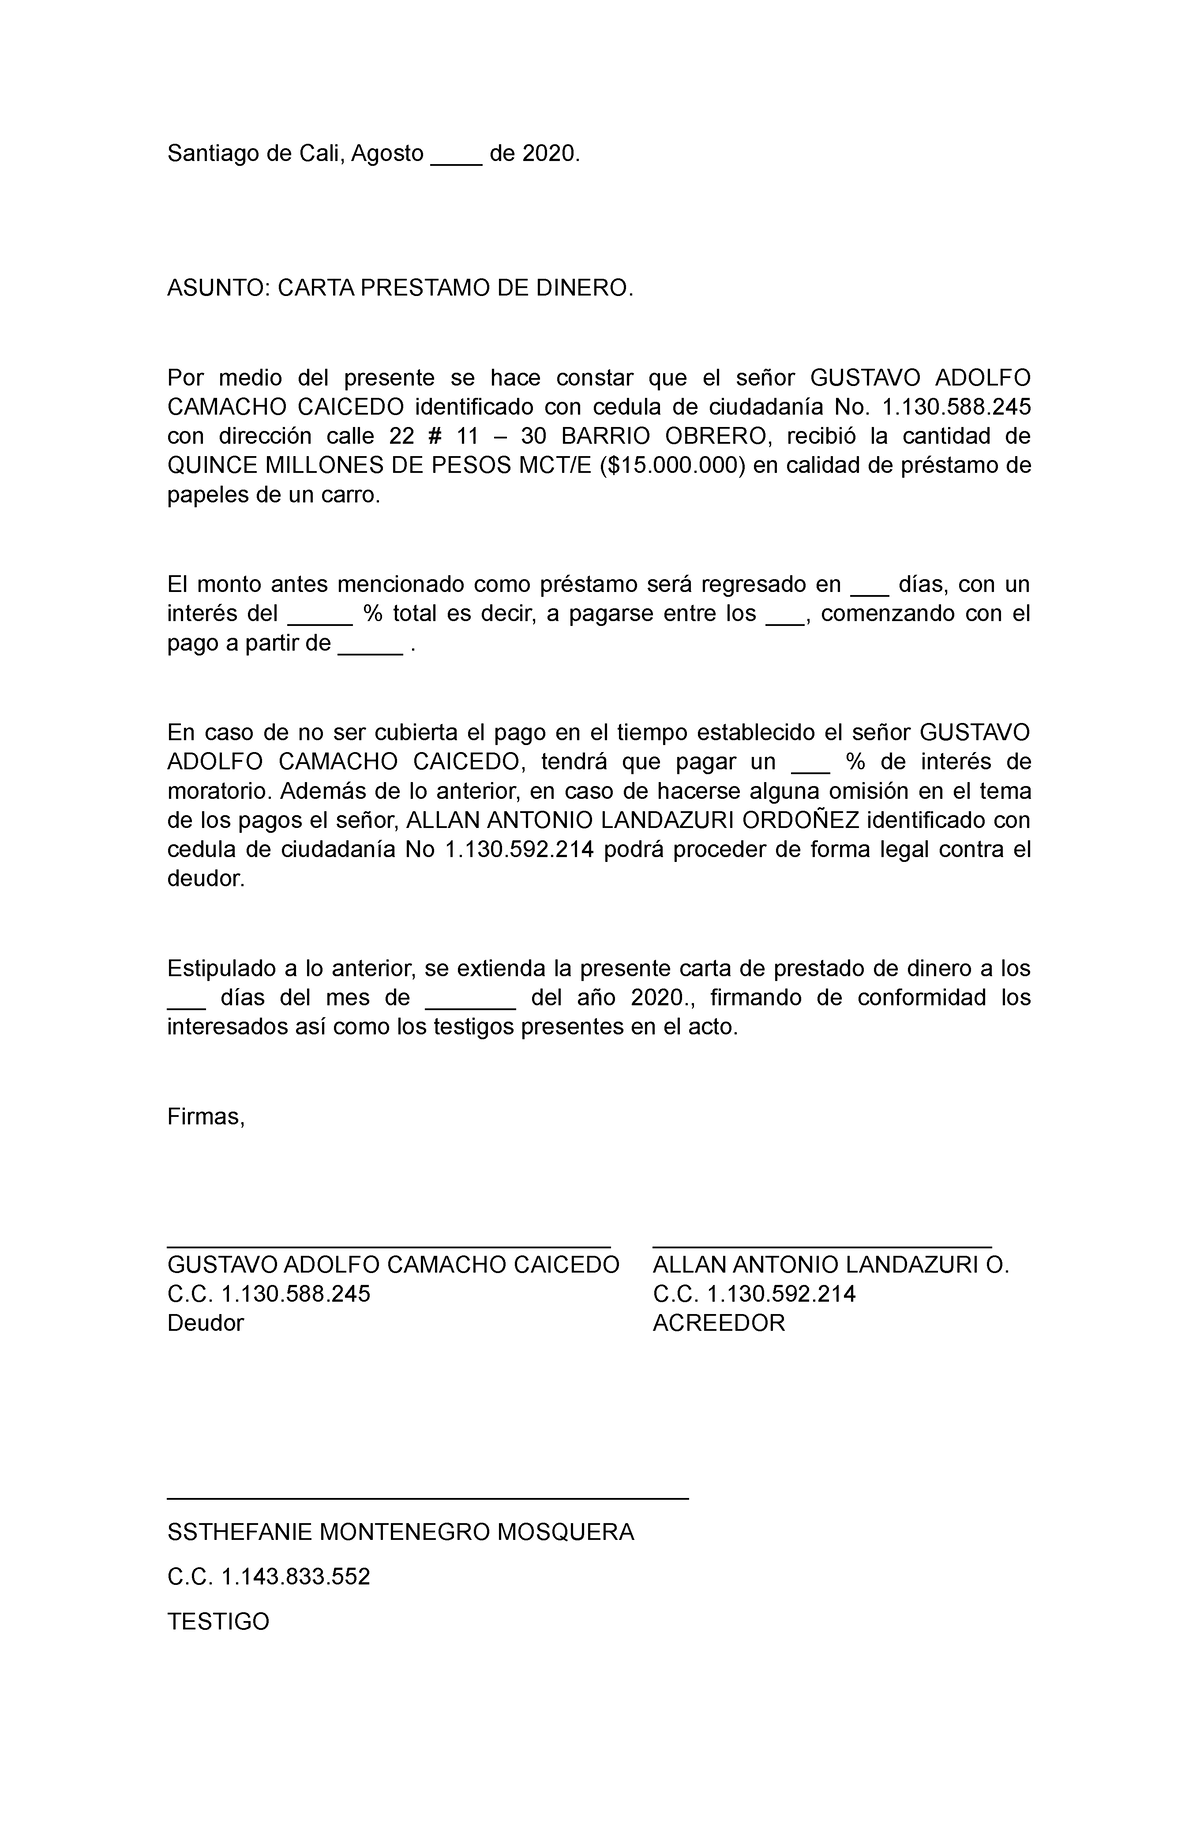 Carta Prestamo De Dinero Santiago De Cali Agosto De 2020 Asunto Carta Prestamo De 6719